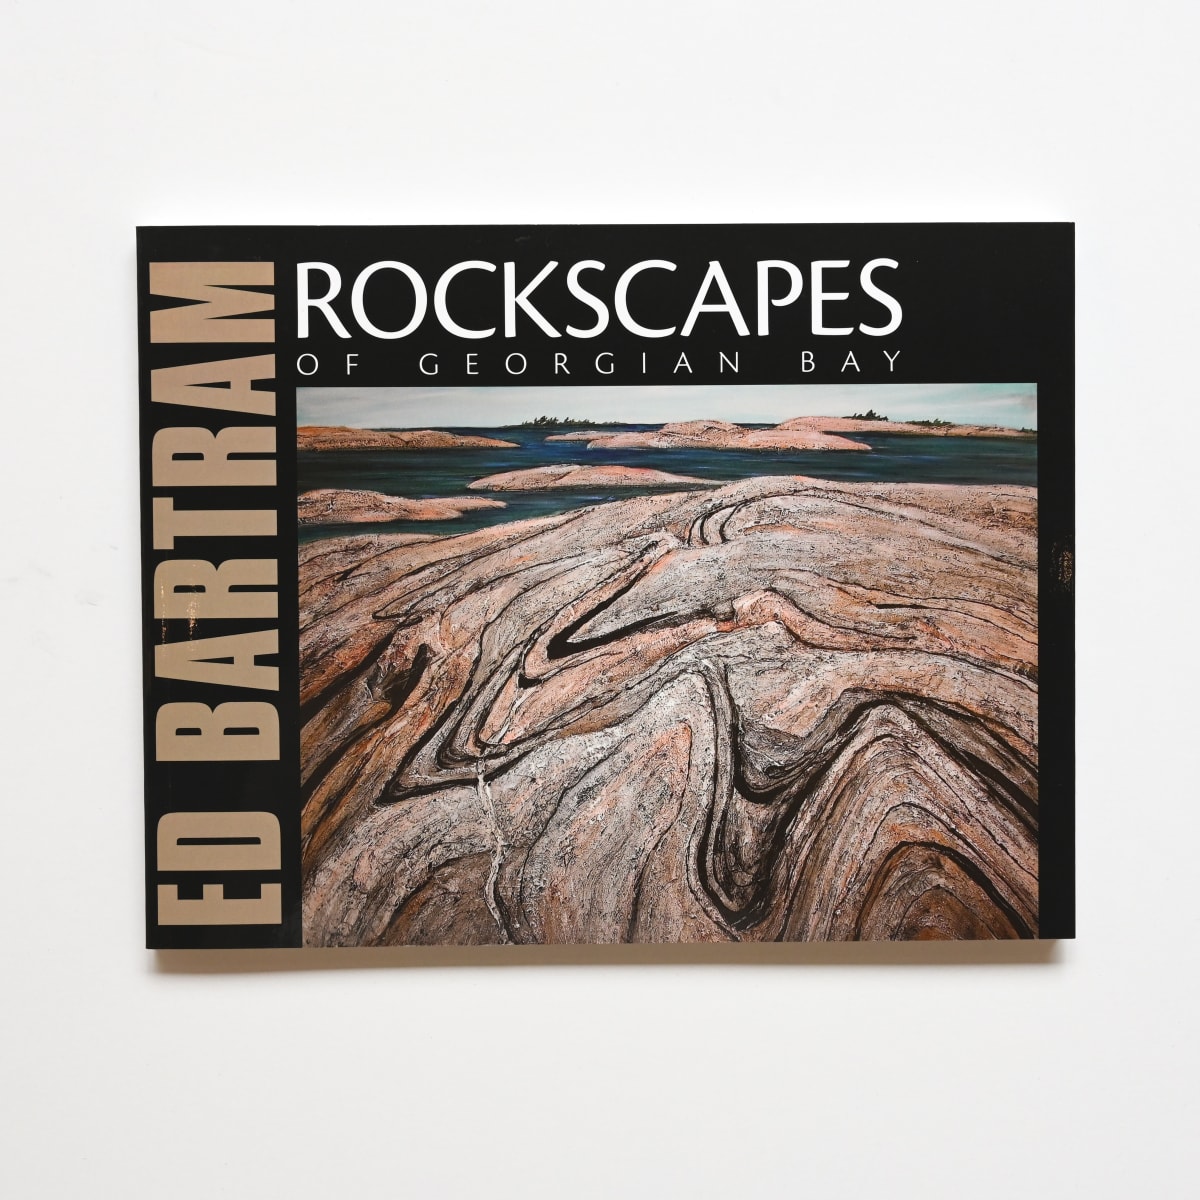 rockscapes of georgian bay by ed bartram